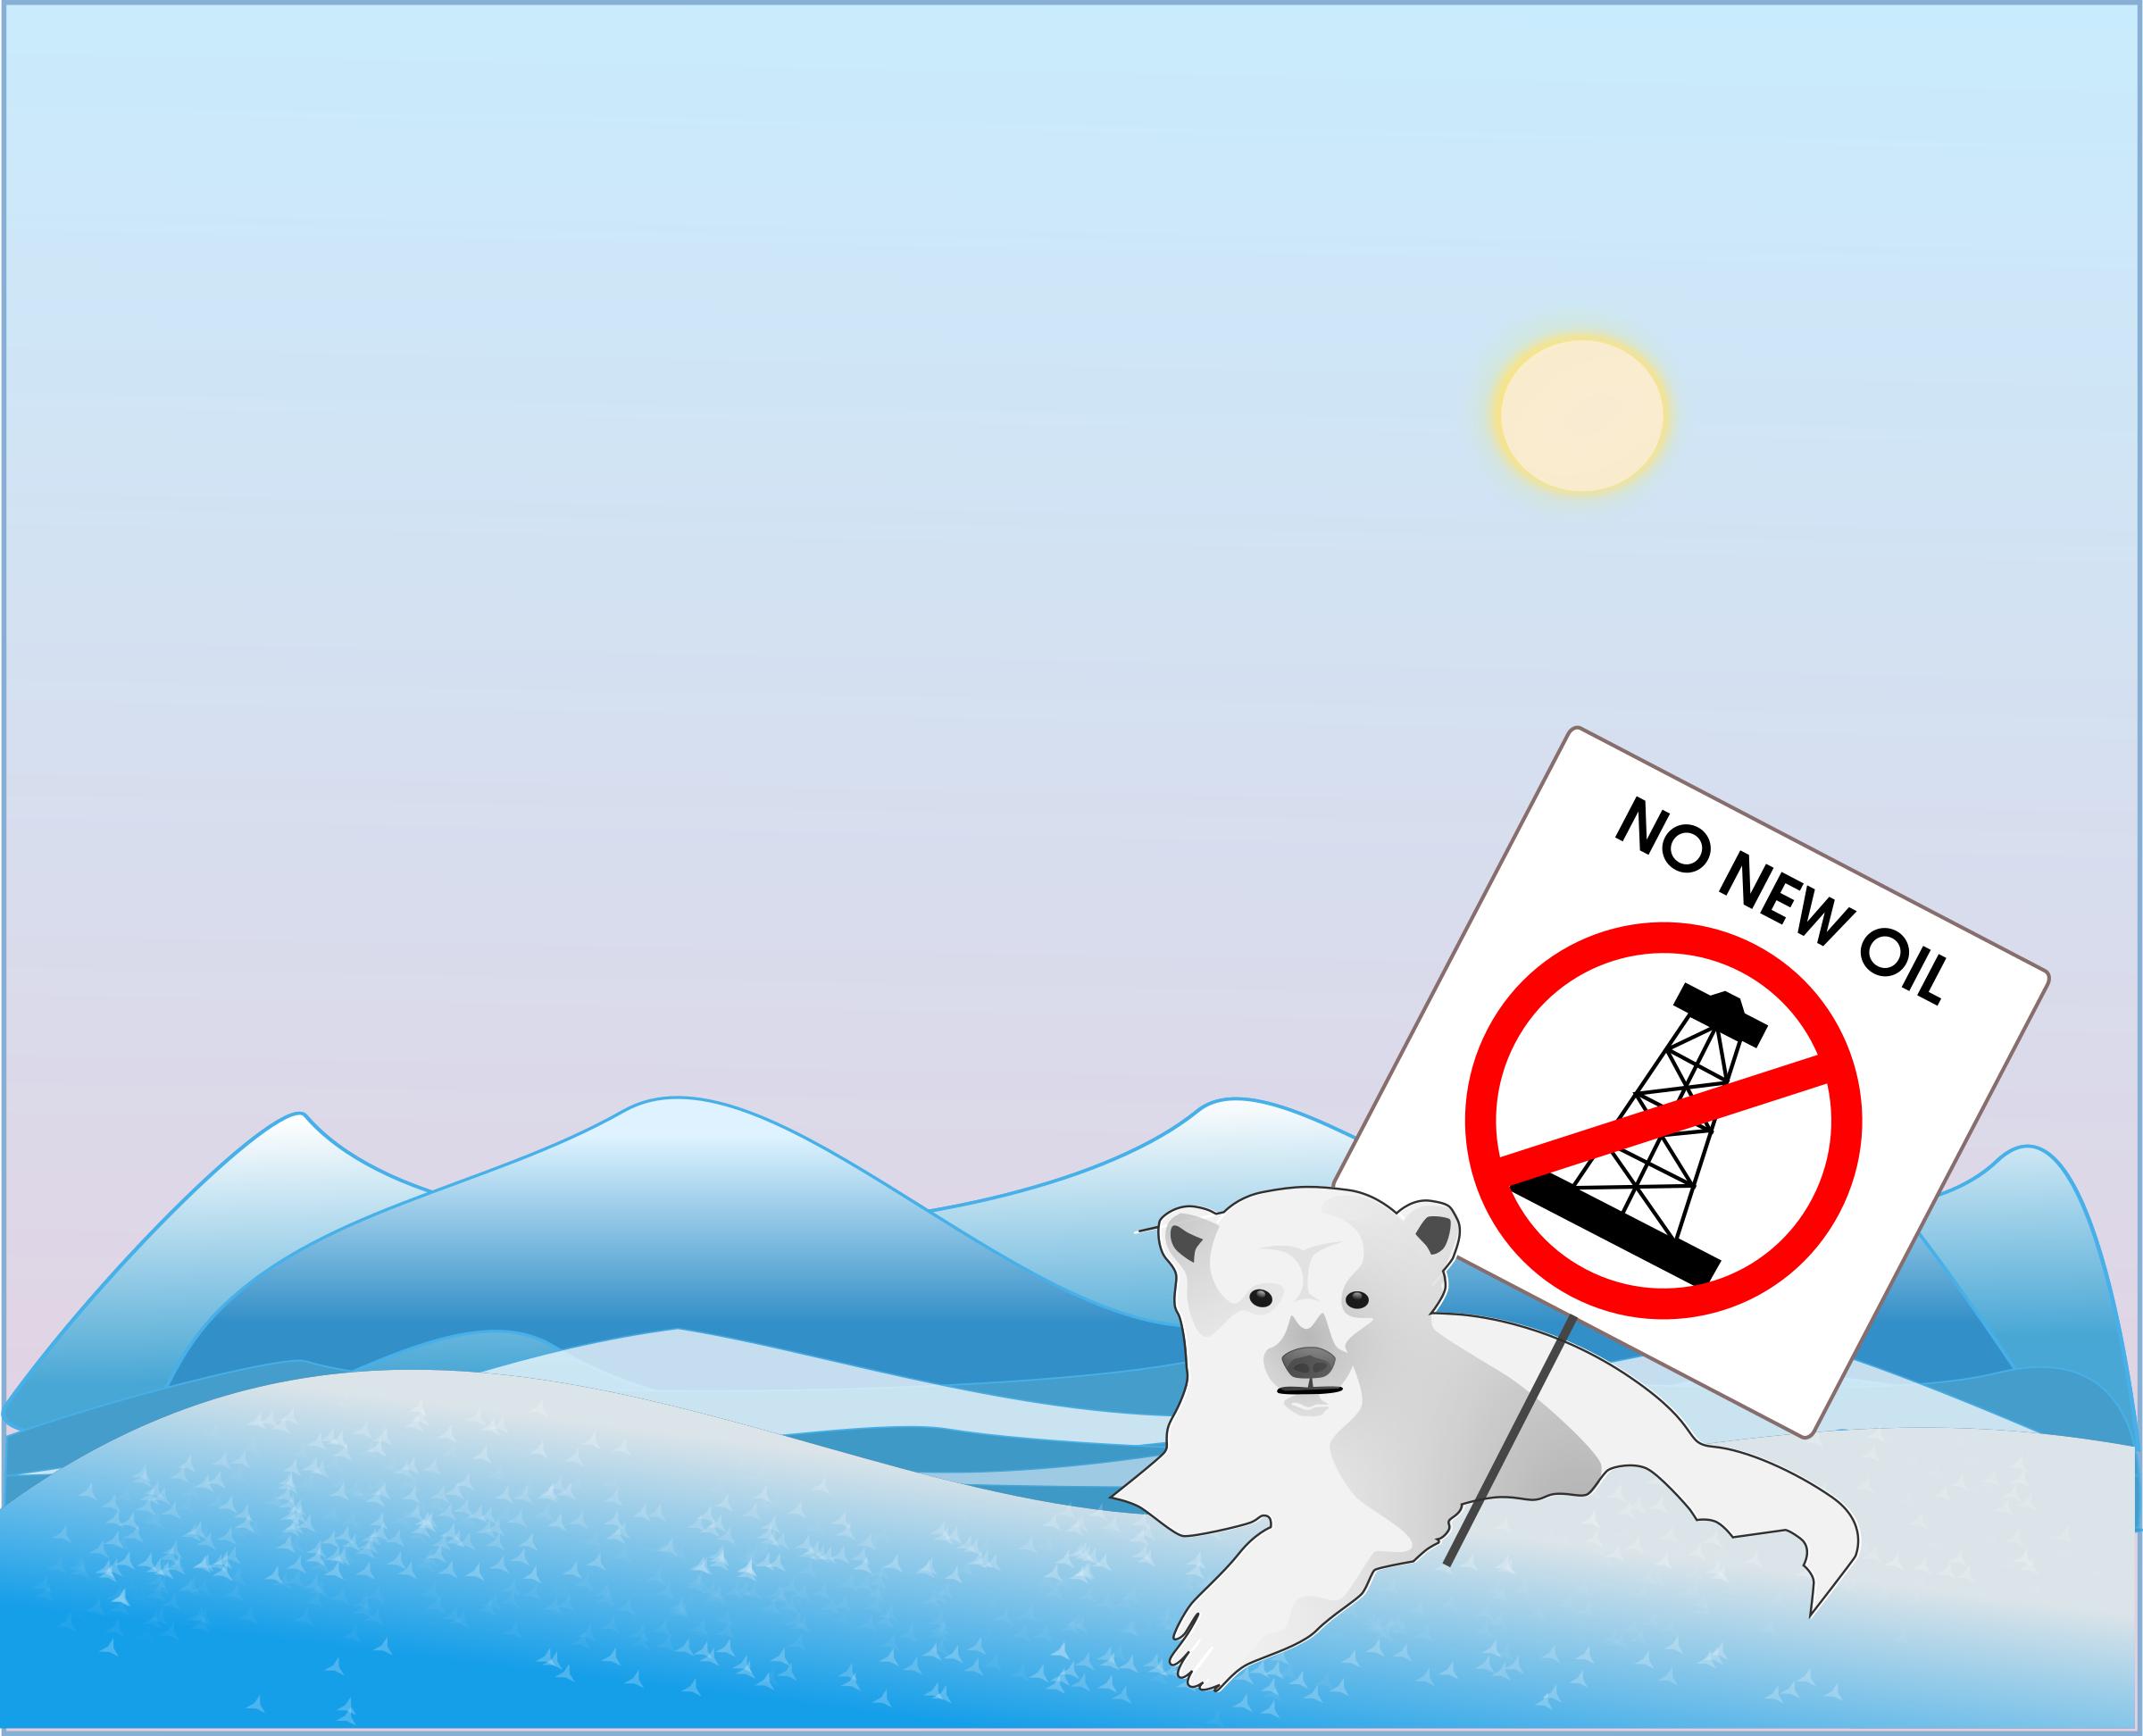 No new oil, says polar bear protestor png